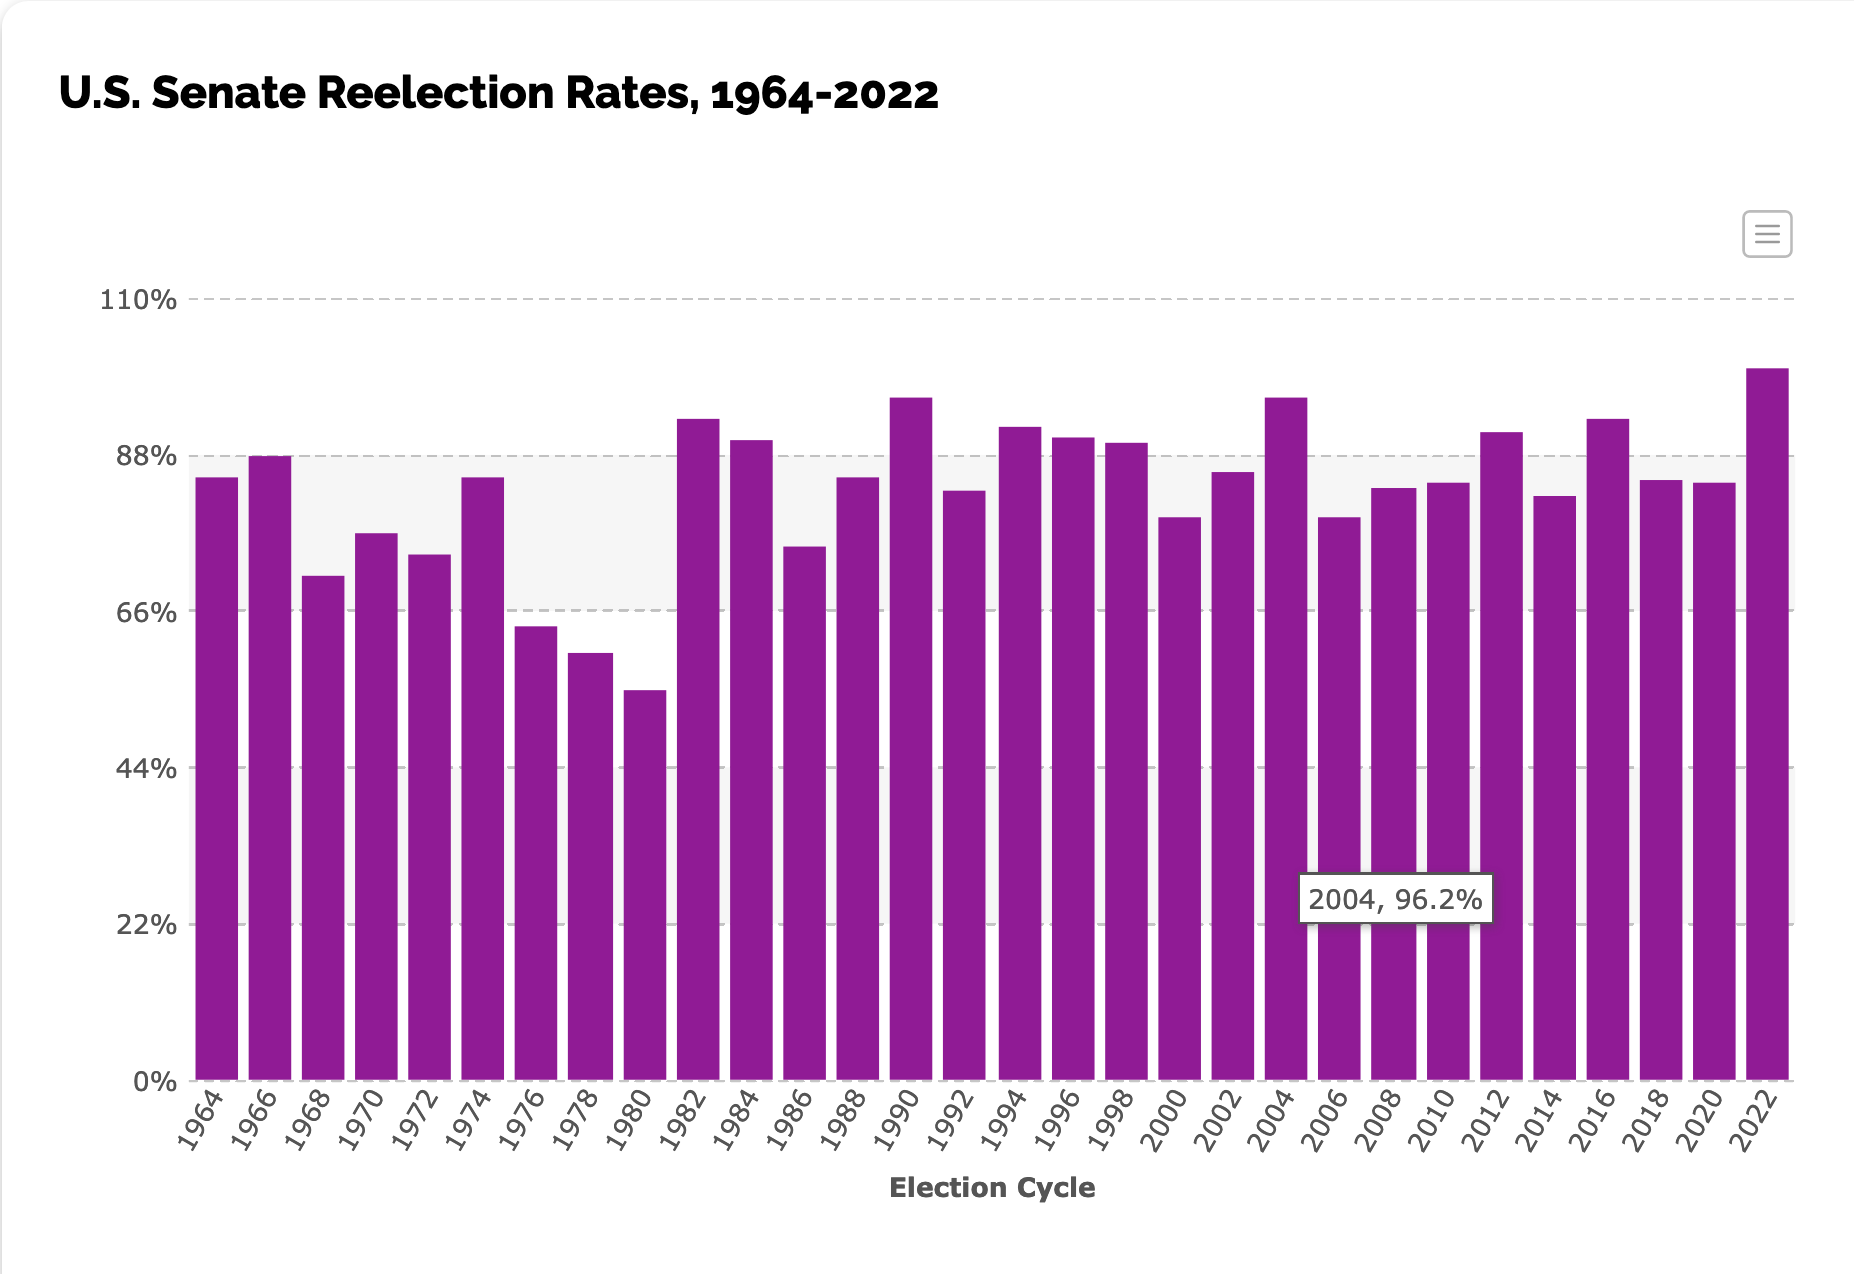 Bar graph of U.S. Senate Reelection Rates